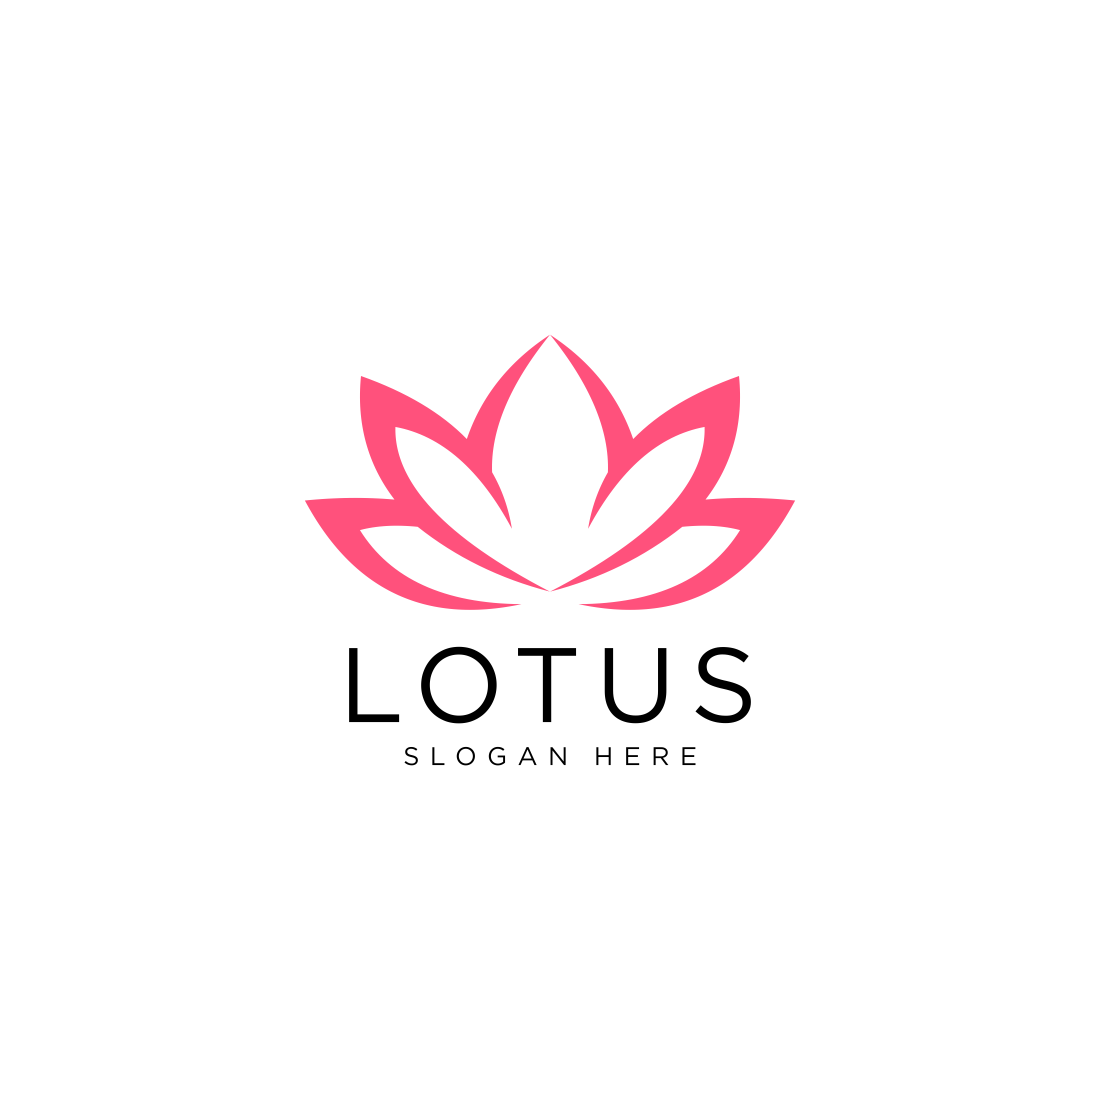 Lotus flower logo vector design preview image.